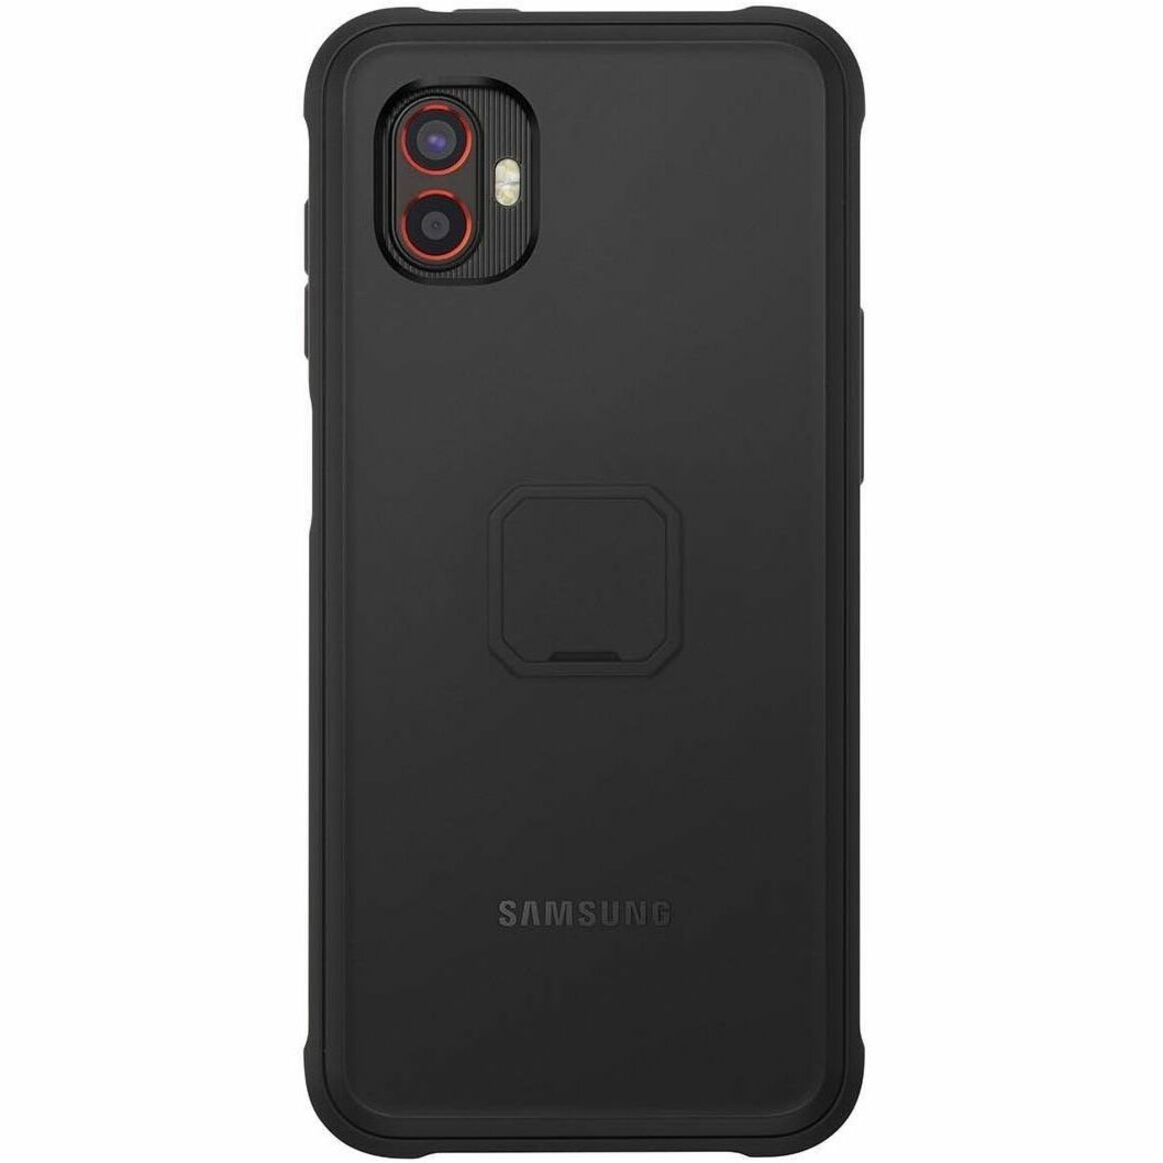 Samsung EF-PG736CBELUS Smart Smartphone Case, Black